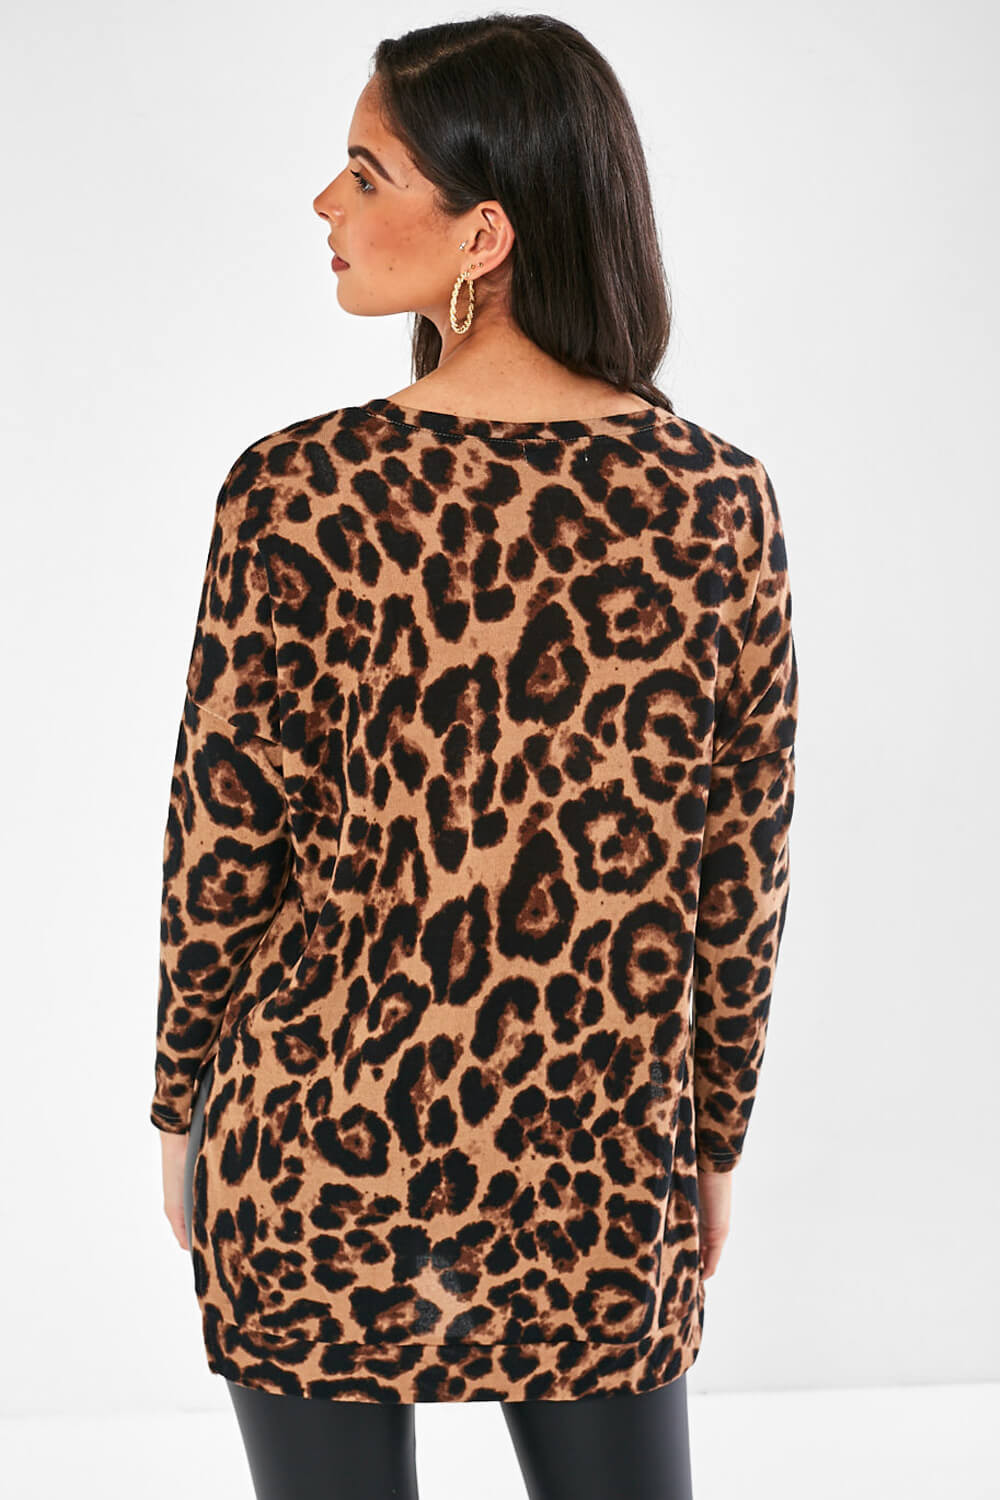 Erin Oversized Top in Leopard Print